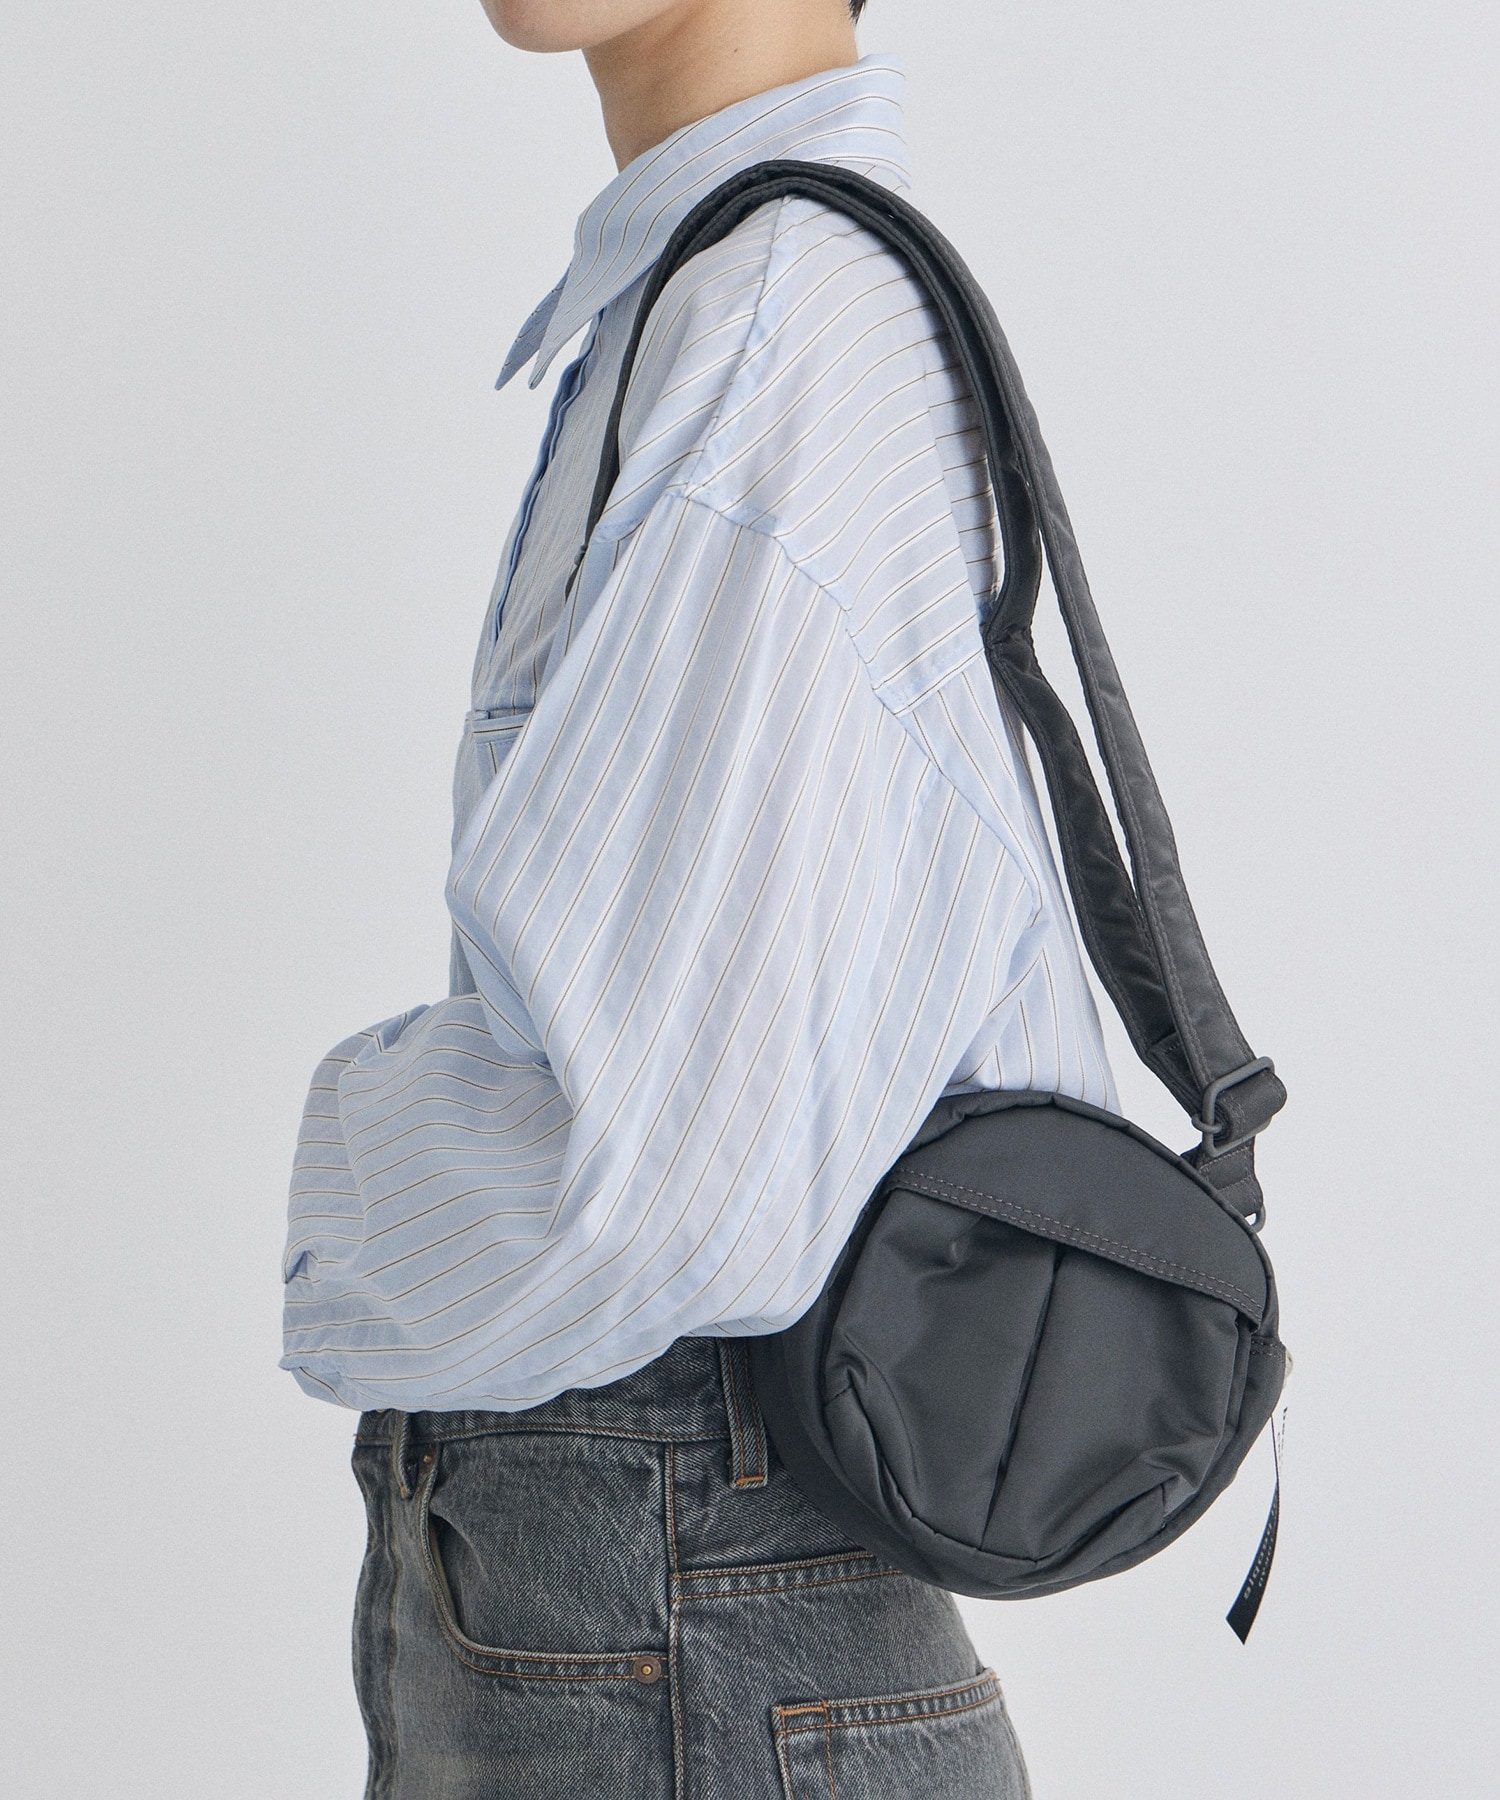 POTRxbp shoulder bag in nylon twill beautiful people